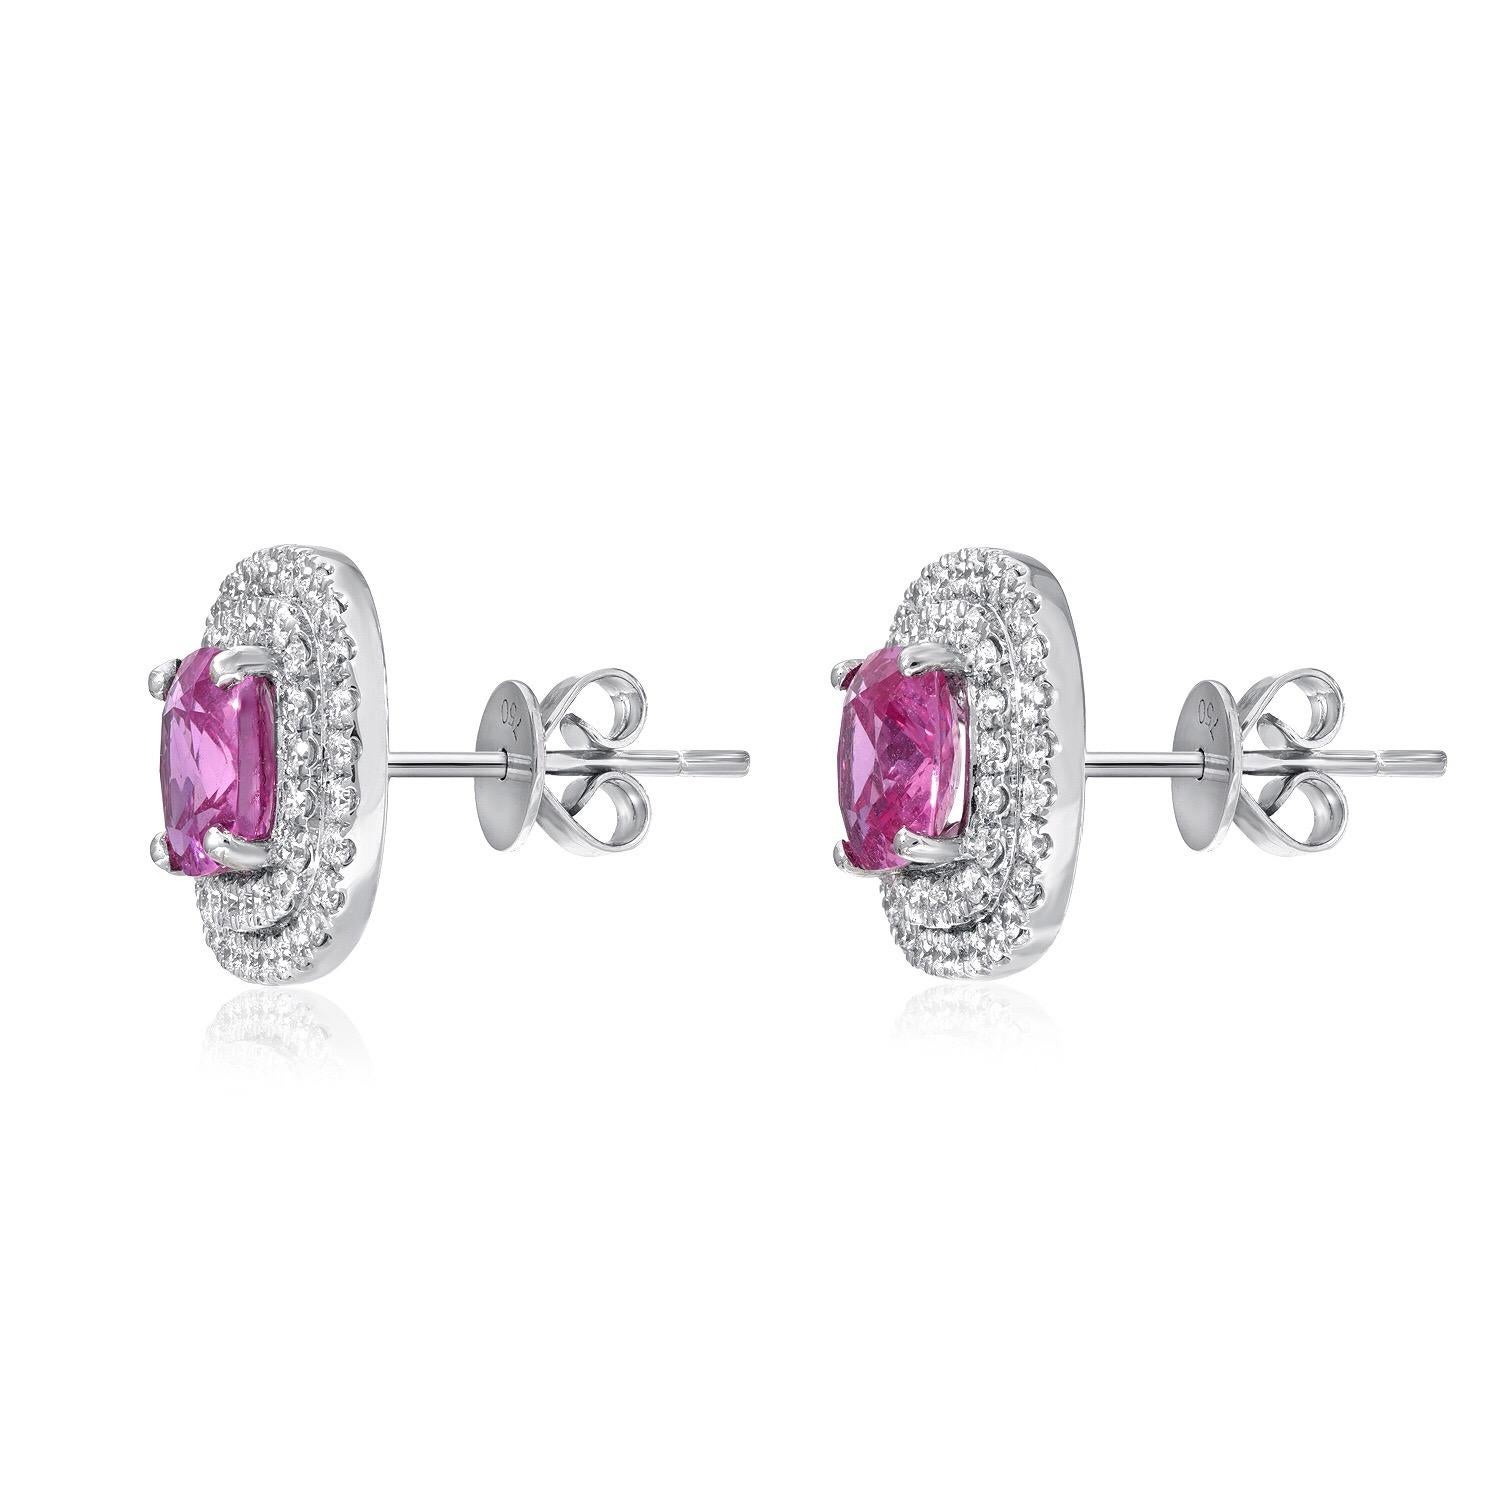 Pink Sapphire Diamond Stud Earrings 3.31 Carat Cushion Cuts (Kissenschliff)